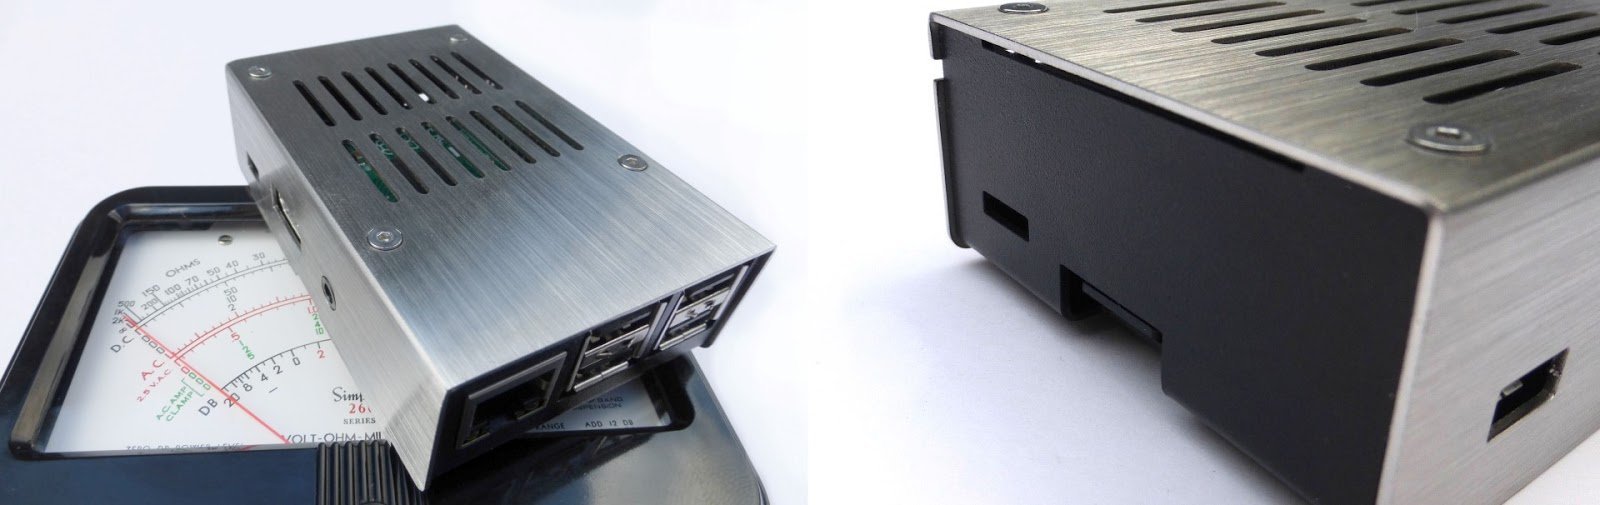 KKSB Stainless Steel Case for Raspberry Pi B+/2 featured in Tallman Labs -Runawaybrainz | KKSB Cases